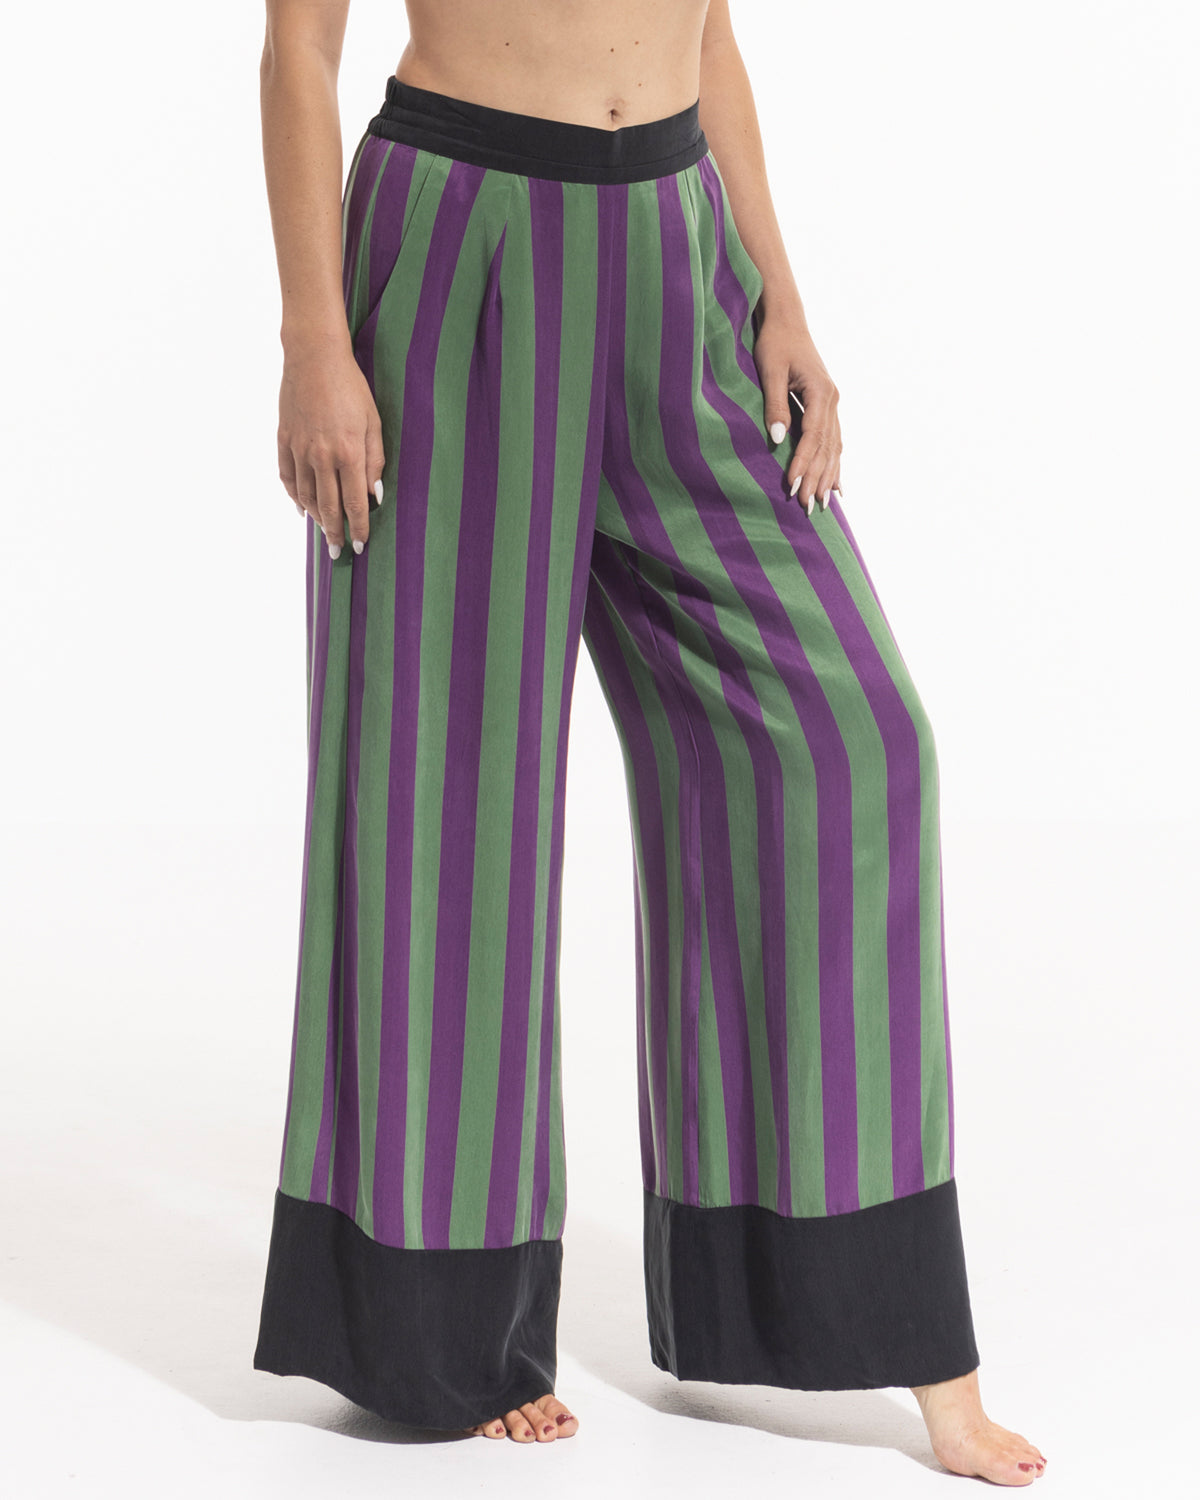 niLuu Women's Pants HARPER Stripe Size M